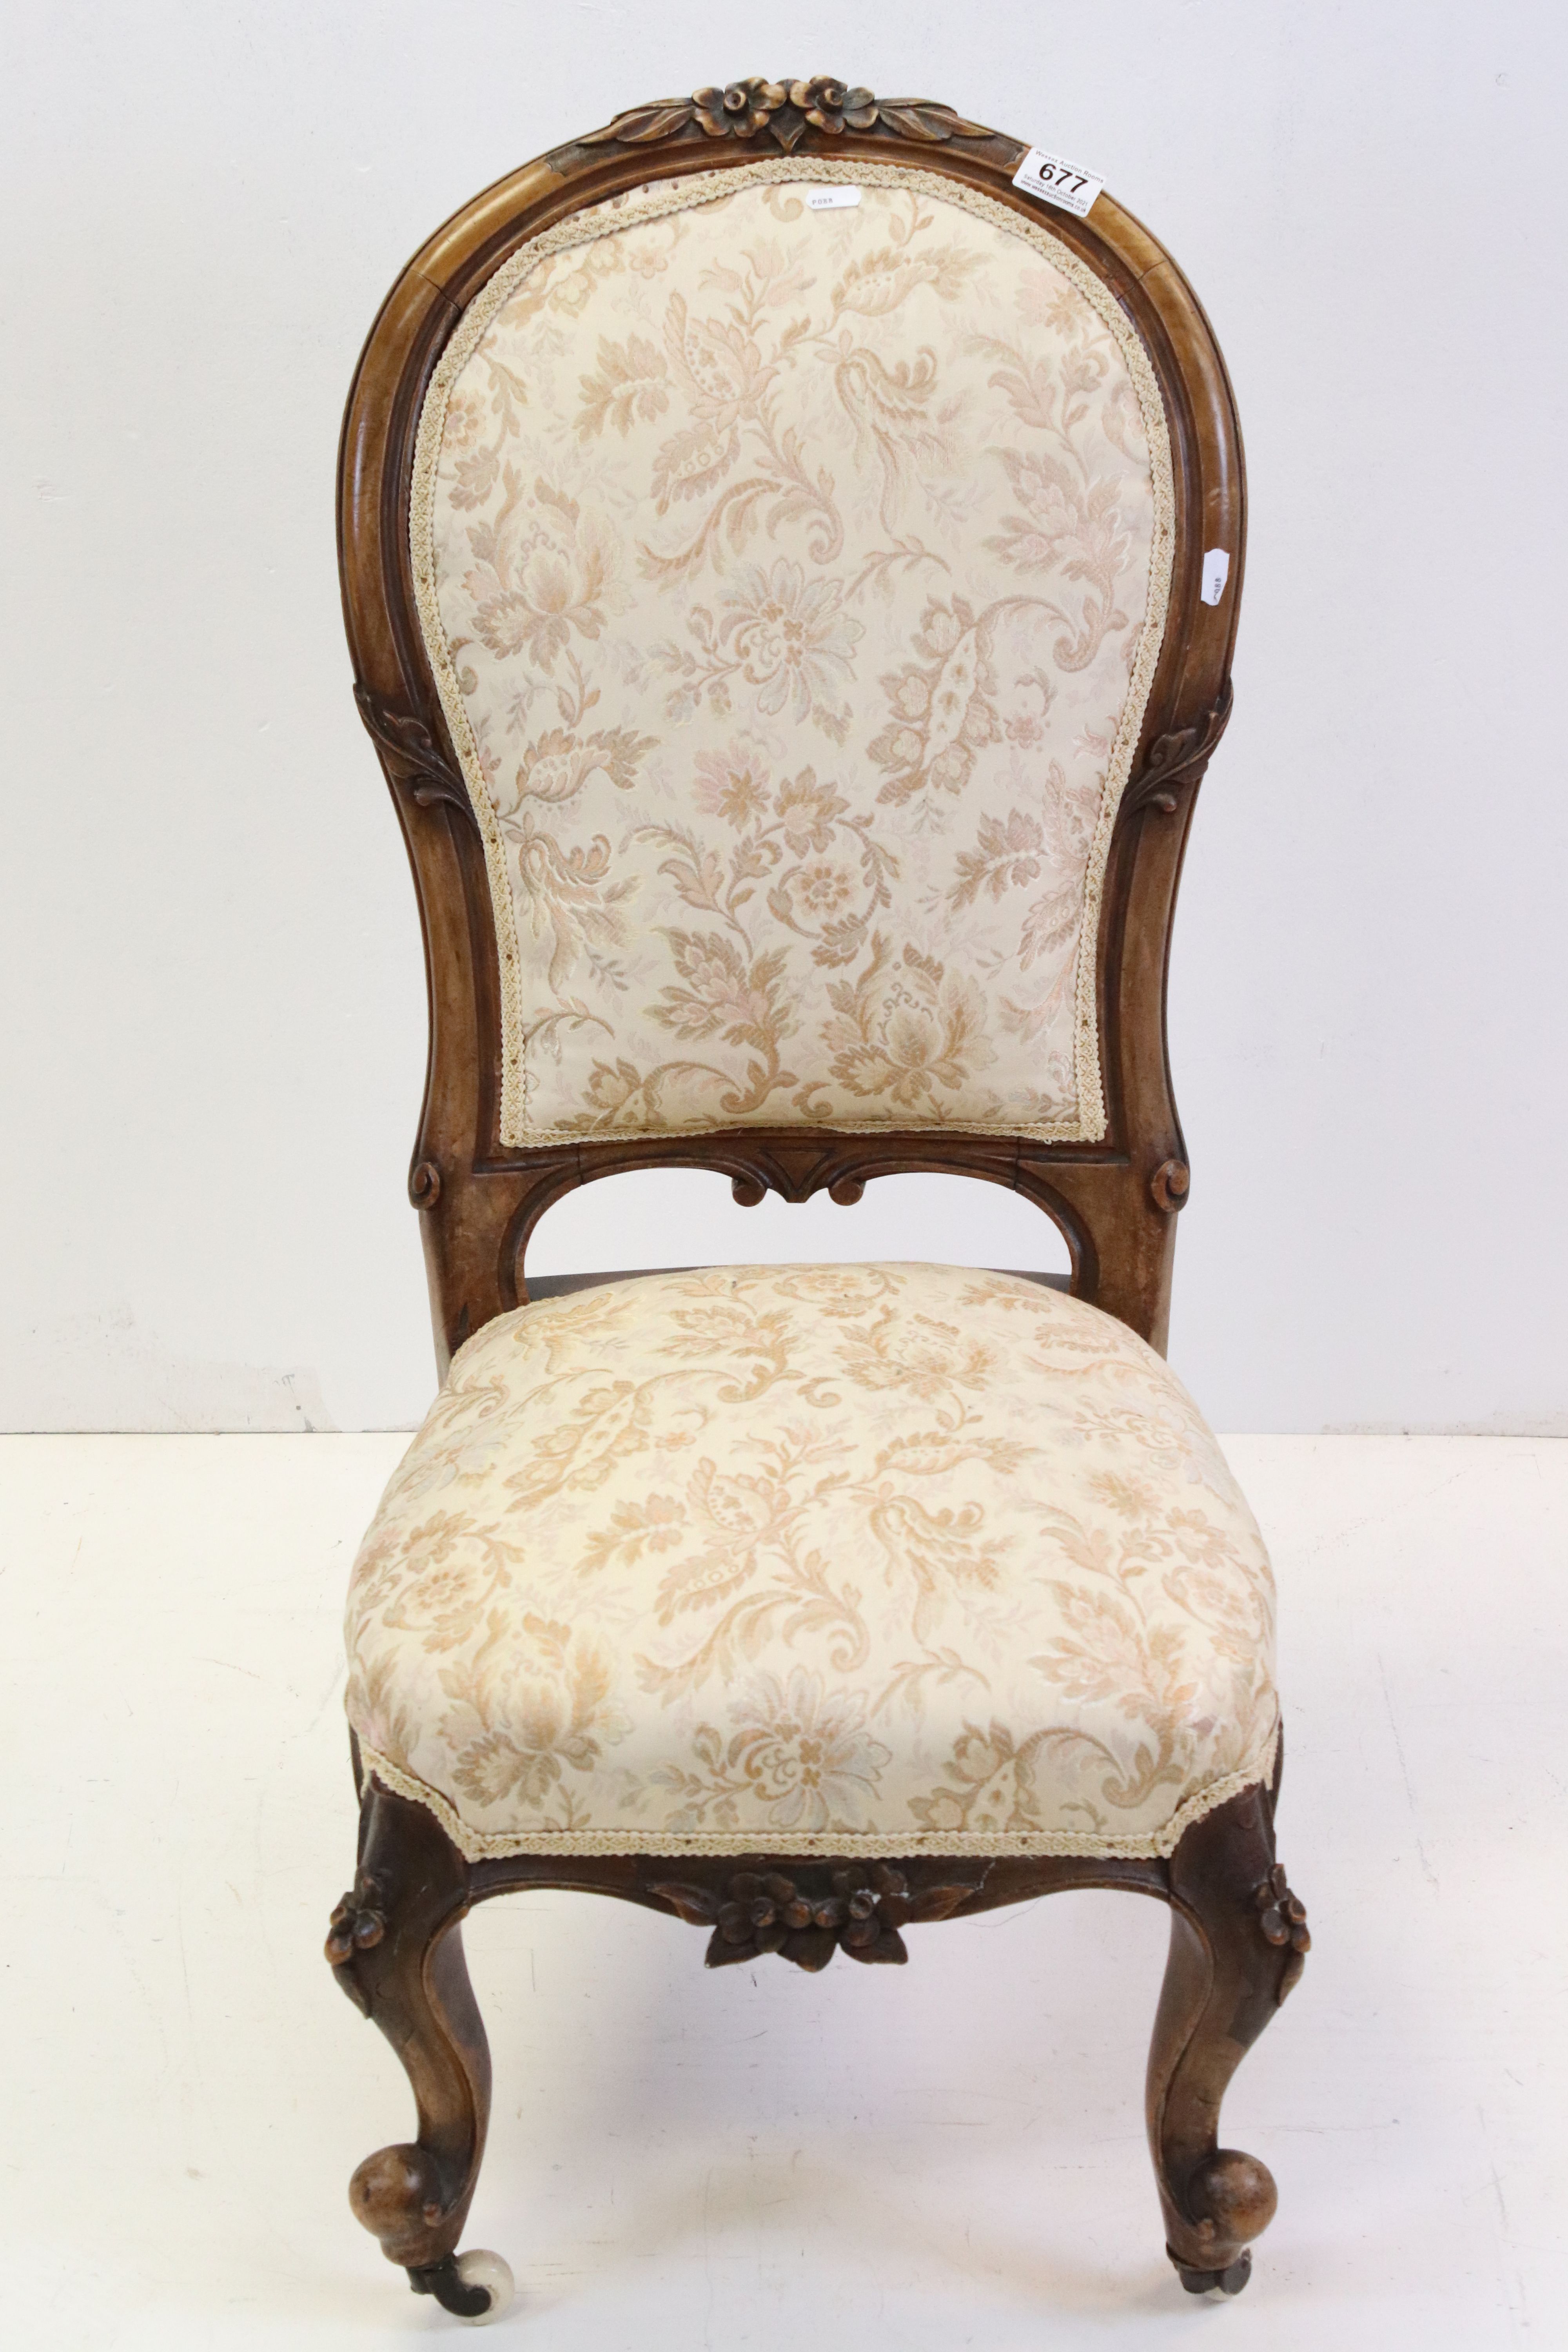 Victorian Walnut Framed Spoon Back Nursing Chair raised on ceramic castors, 87cms high - Image 2 of 5